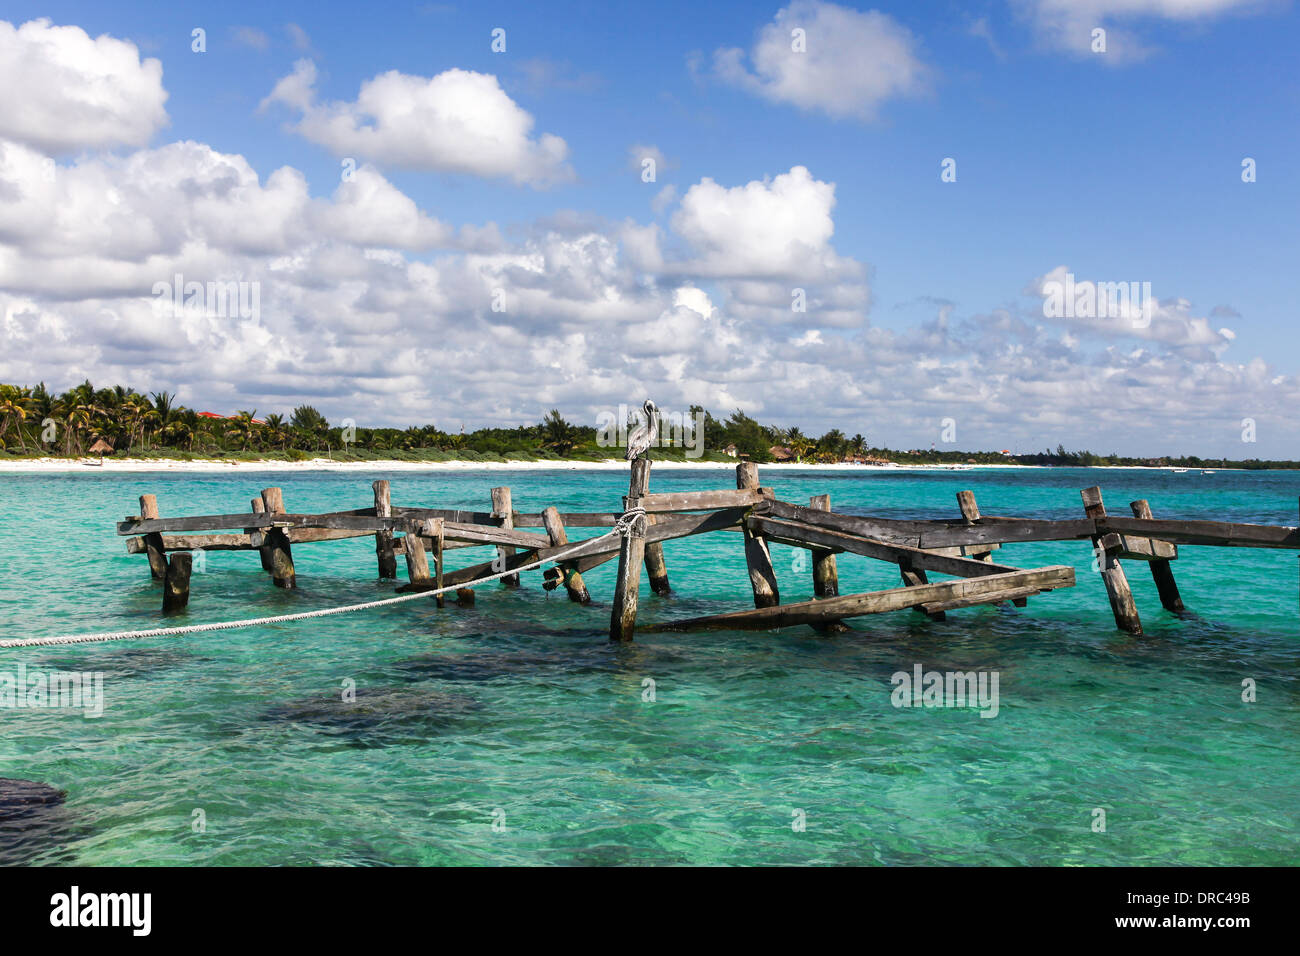 A Pelican sitting on an old wooden jetty in the Caribbean sea at Riviera Maya Mayan Riviera Cancun Yucatan Peninsular Mexico Stock Photo